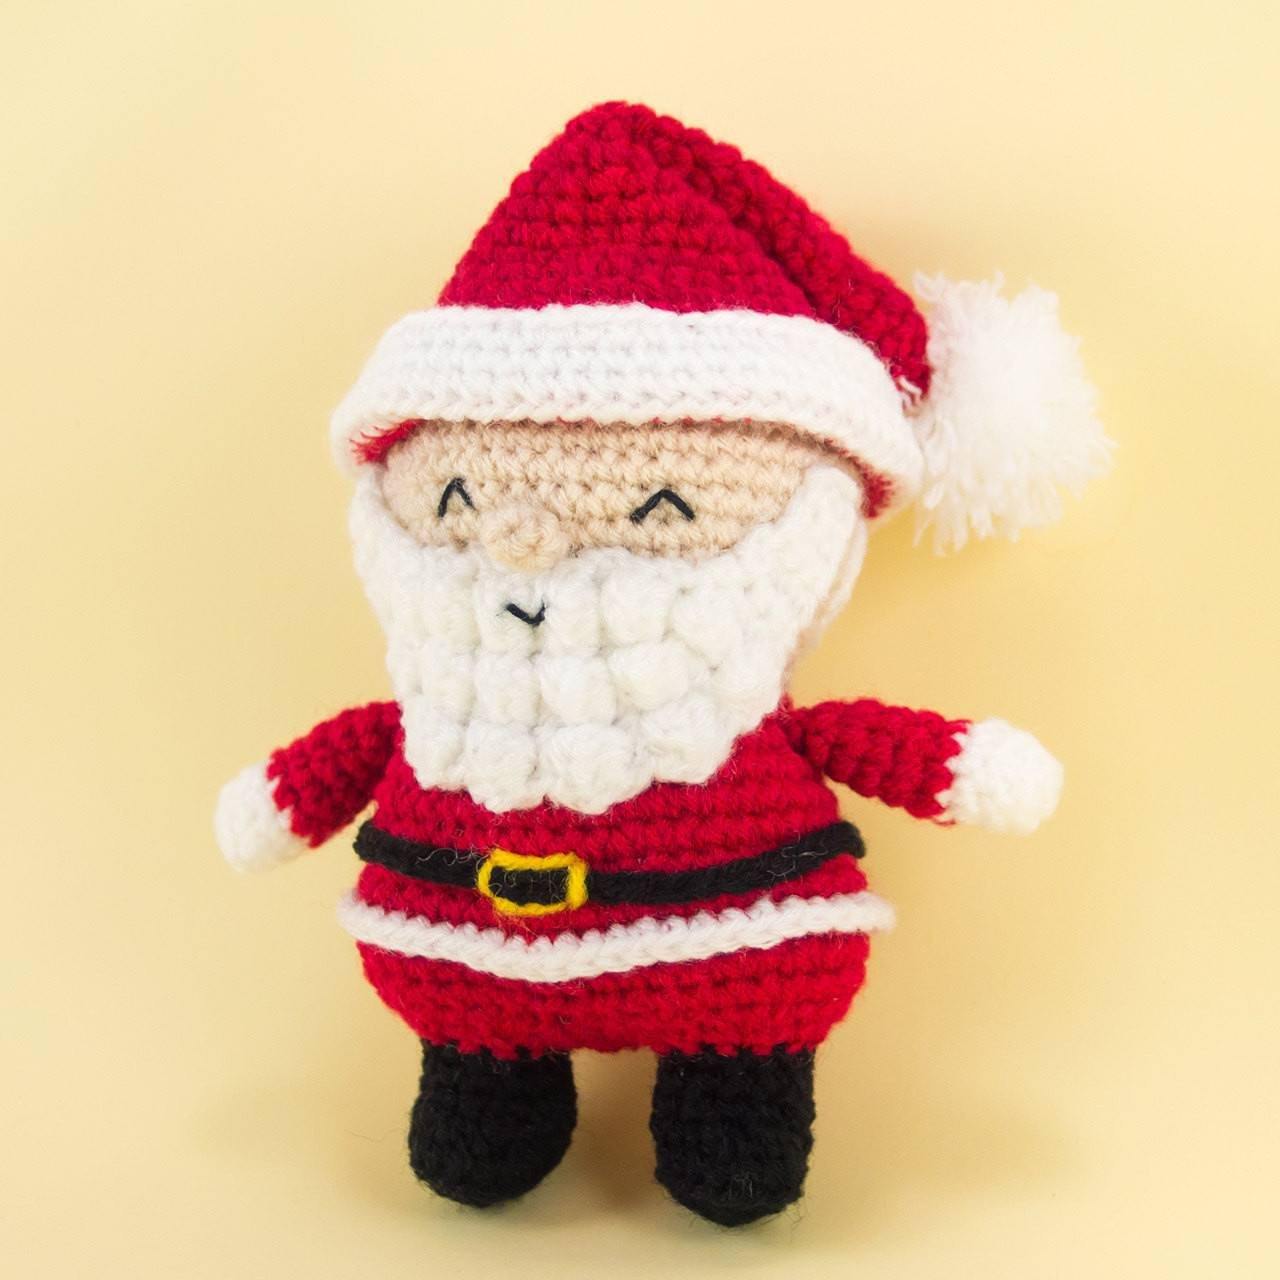 Crochet Santa Claus Pattern